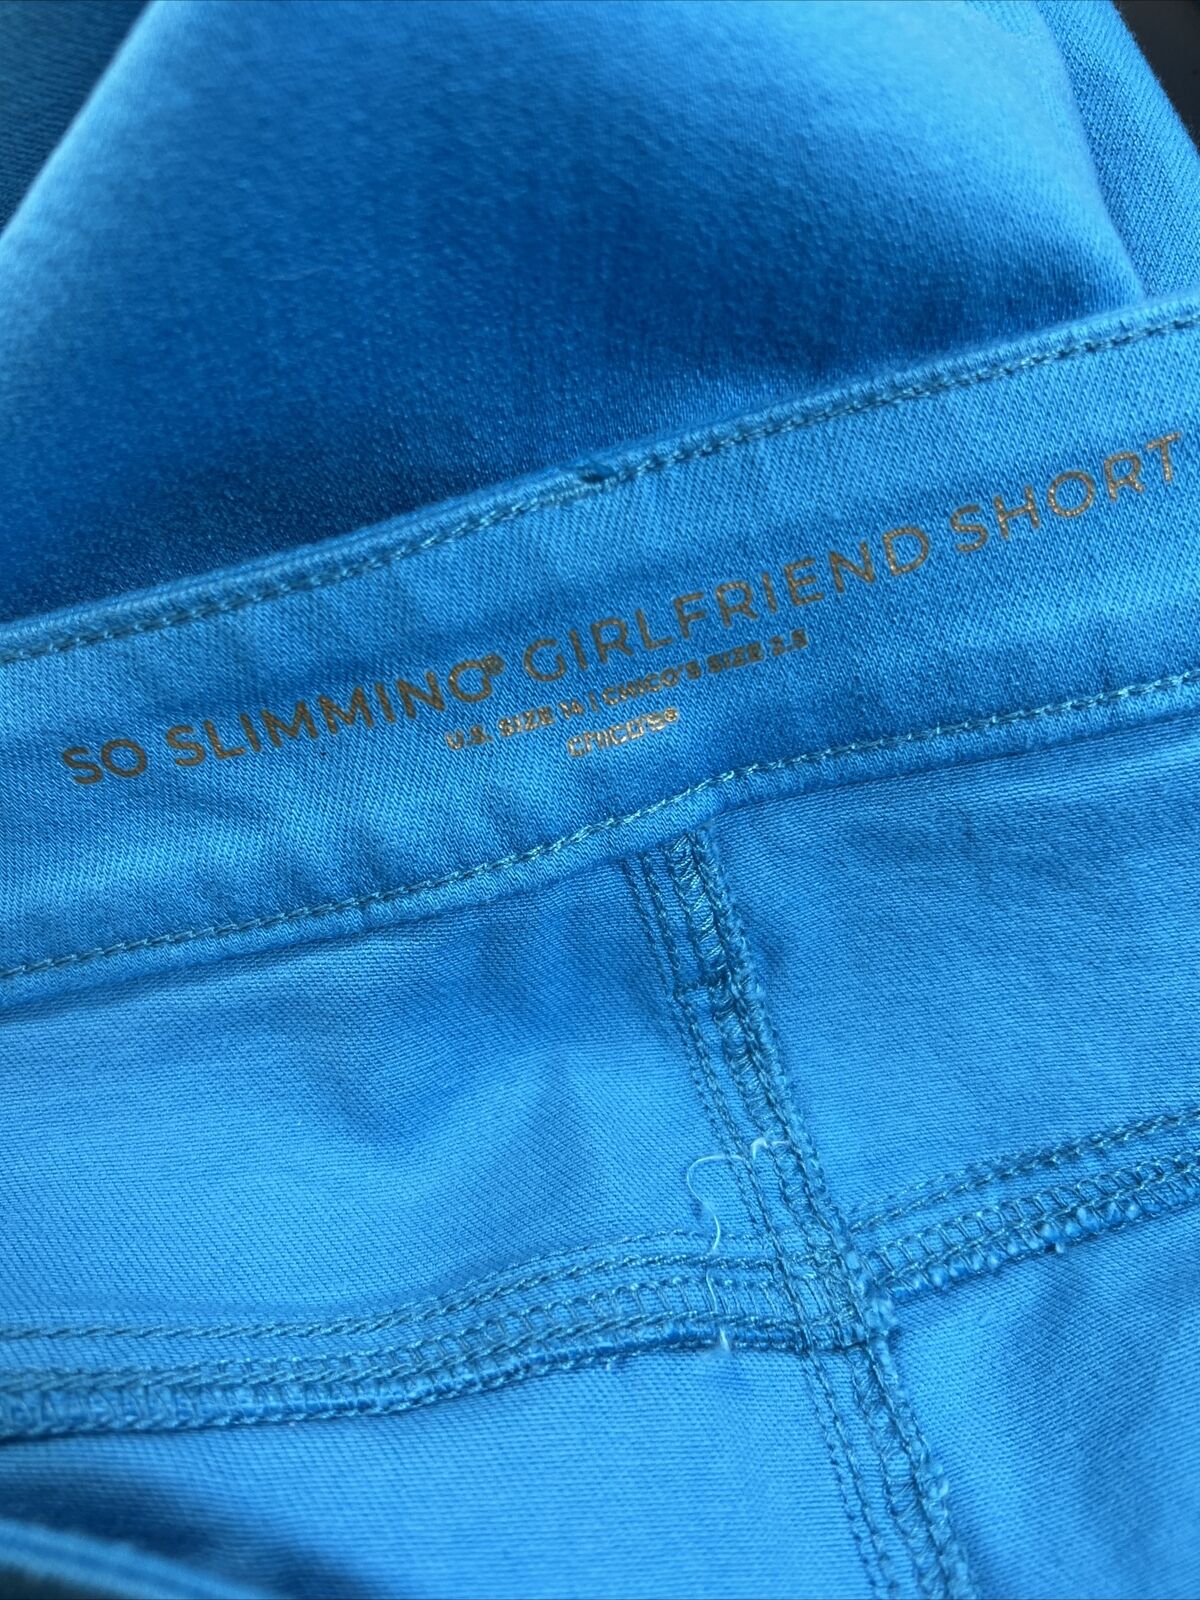 NEW Chico's Women's Blue So Slimming Girlfriend Shorts - 2.5/ 14